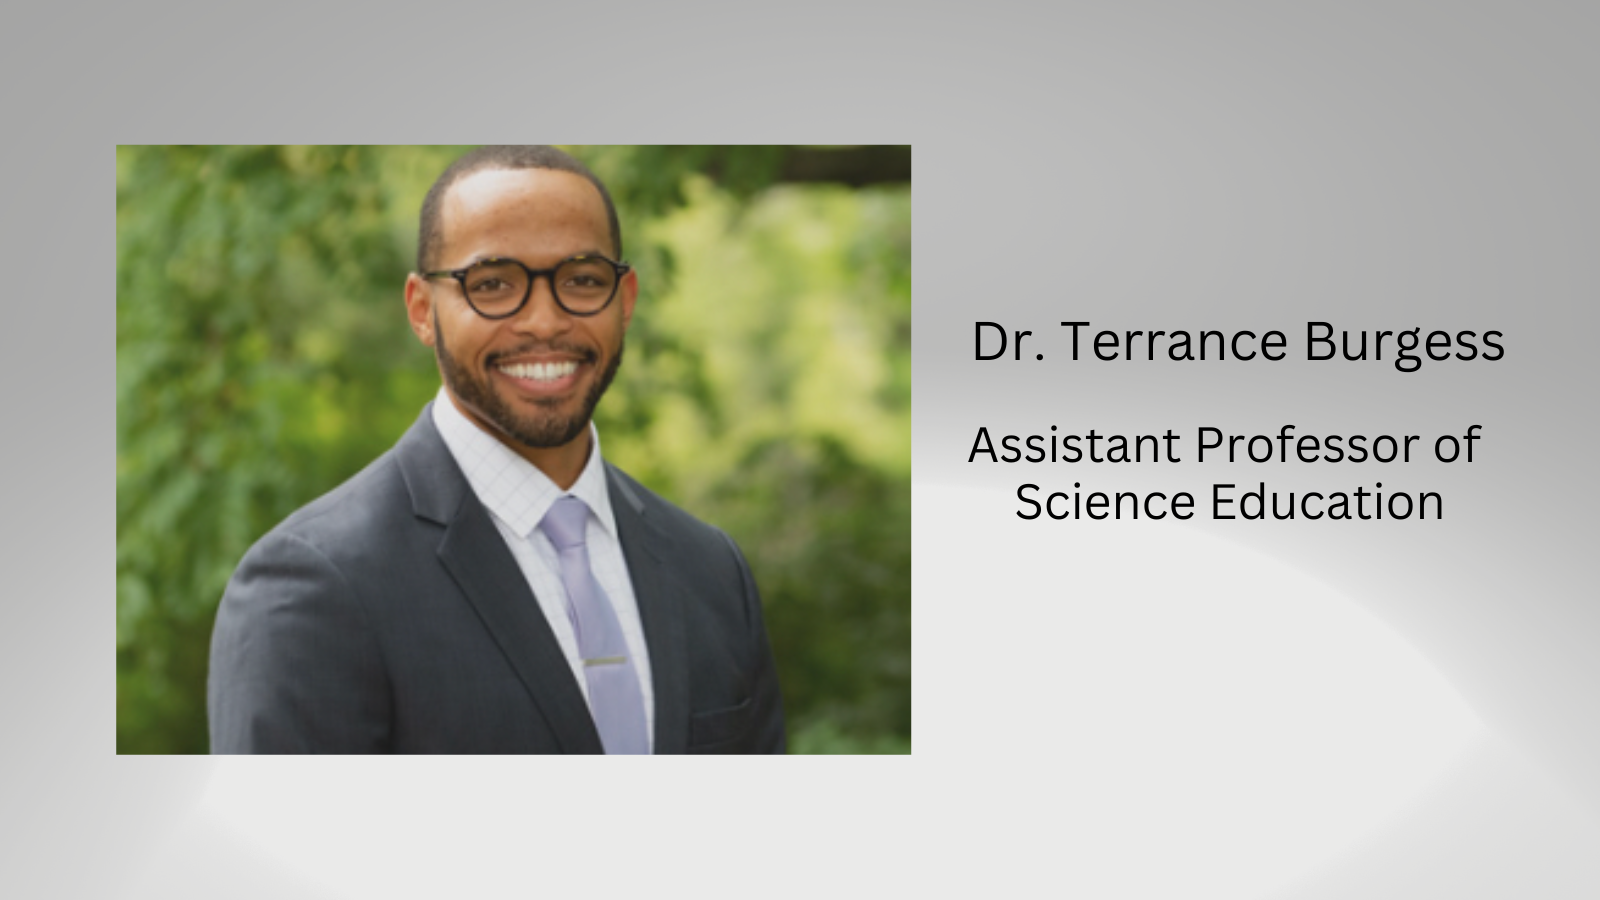 Dr. Terrance Burgess, Assistant Professor of Science Education